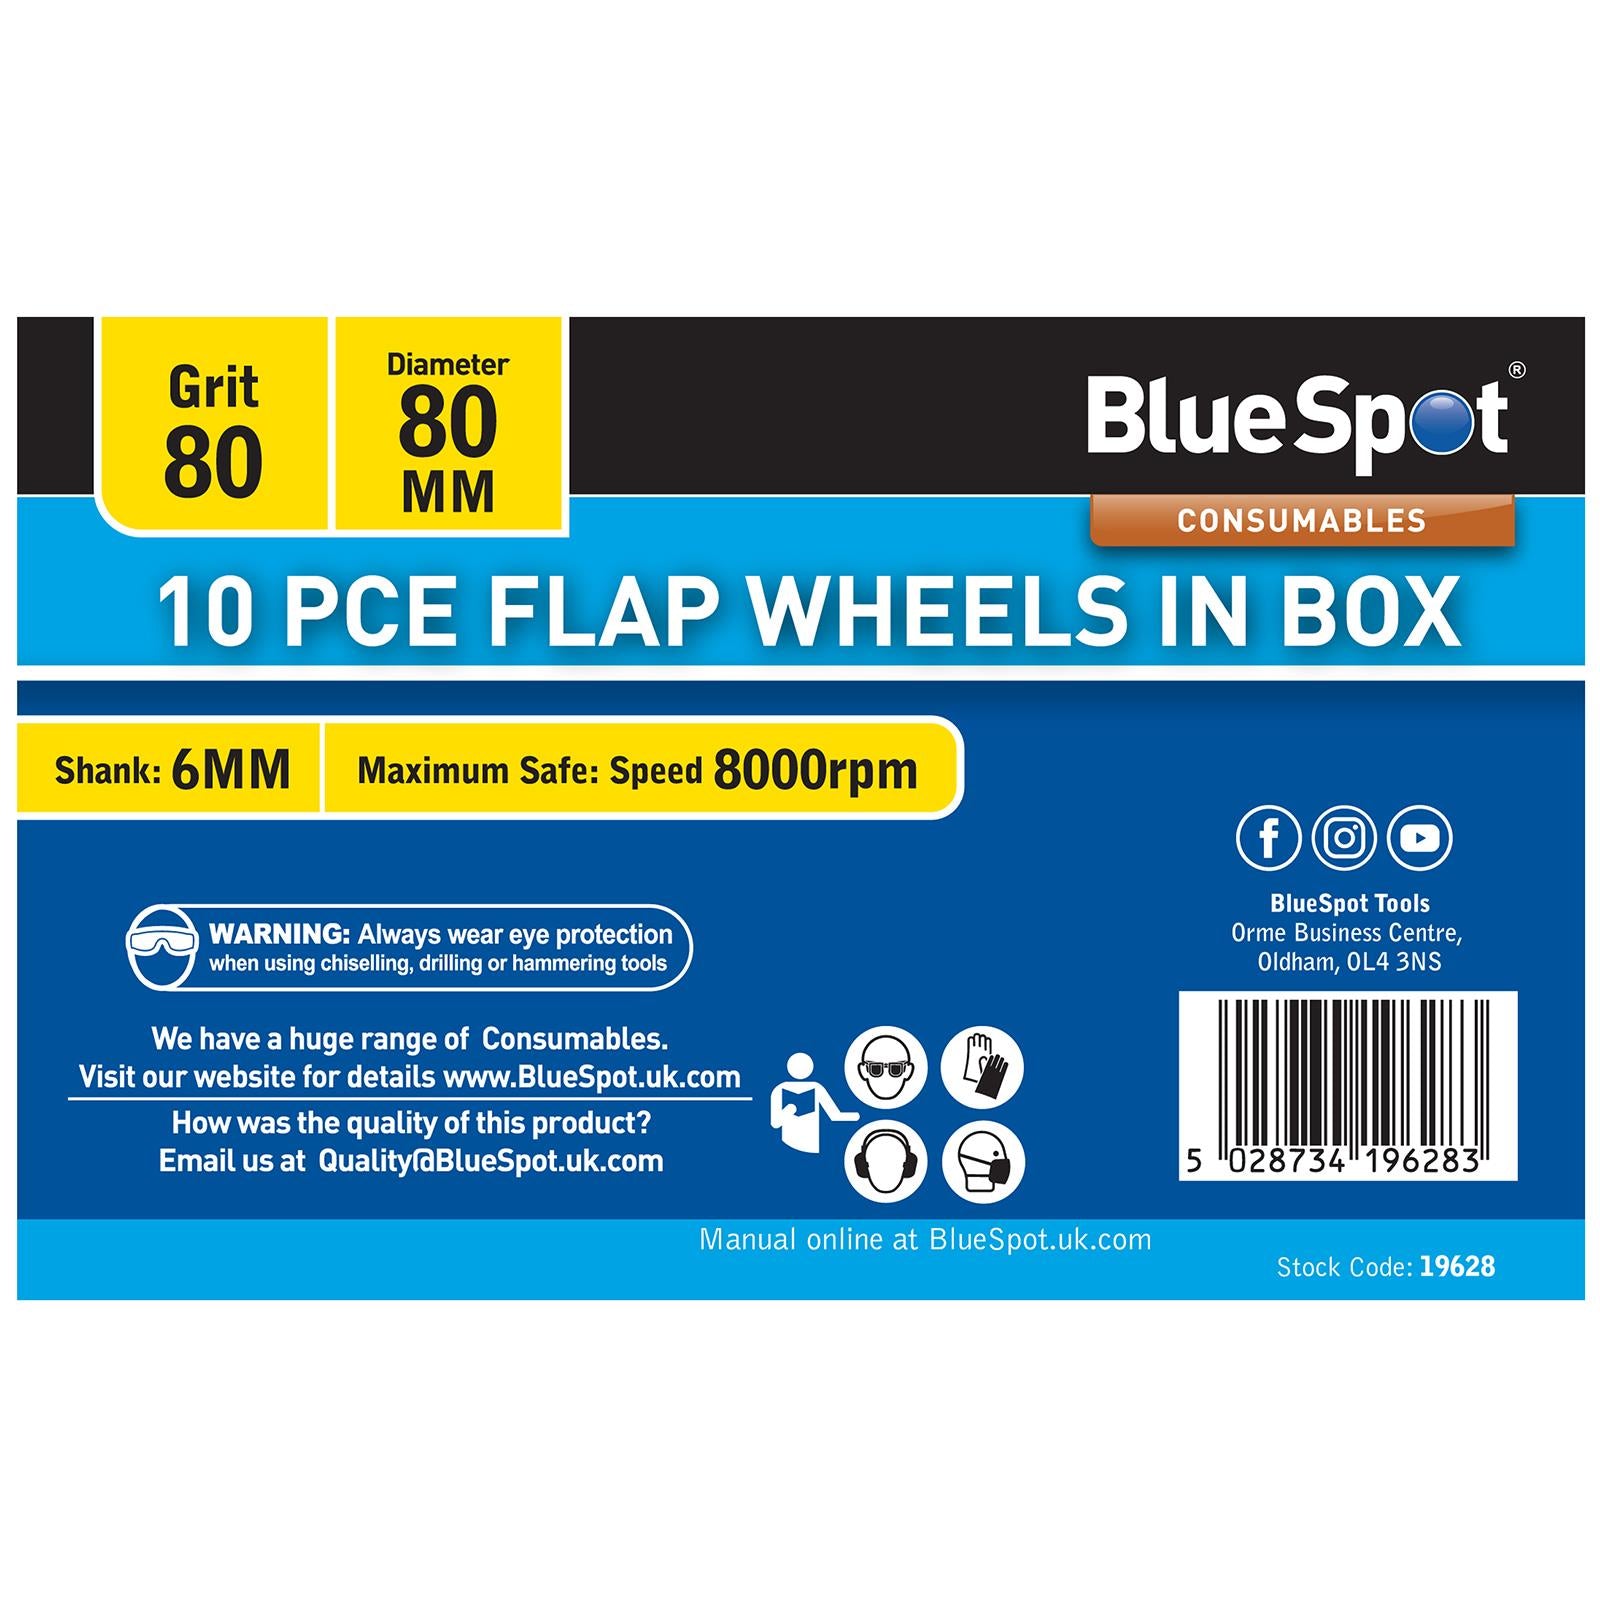 BlueSpot Flap Wheels In Box 10 Pieces 800 Grit 80mm